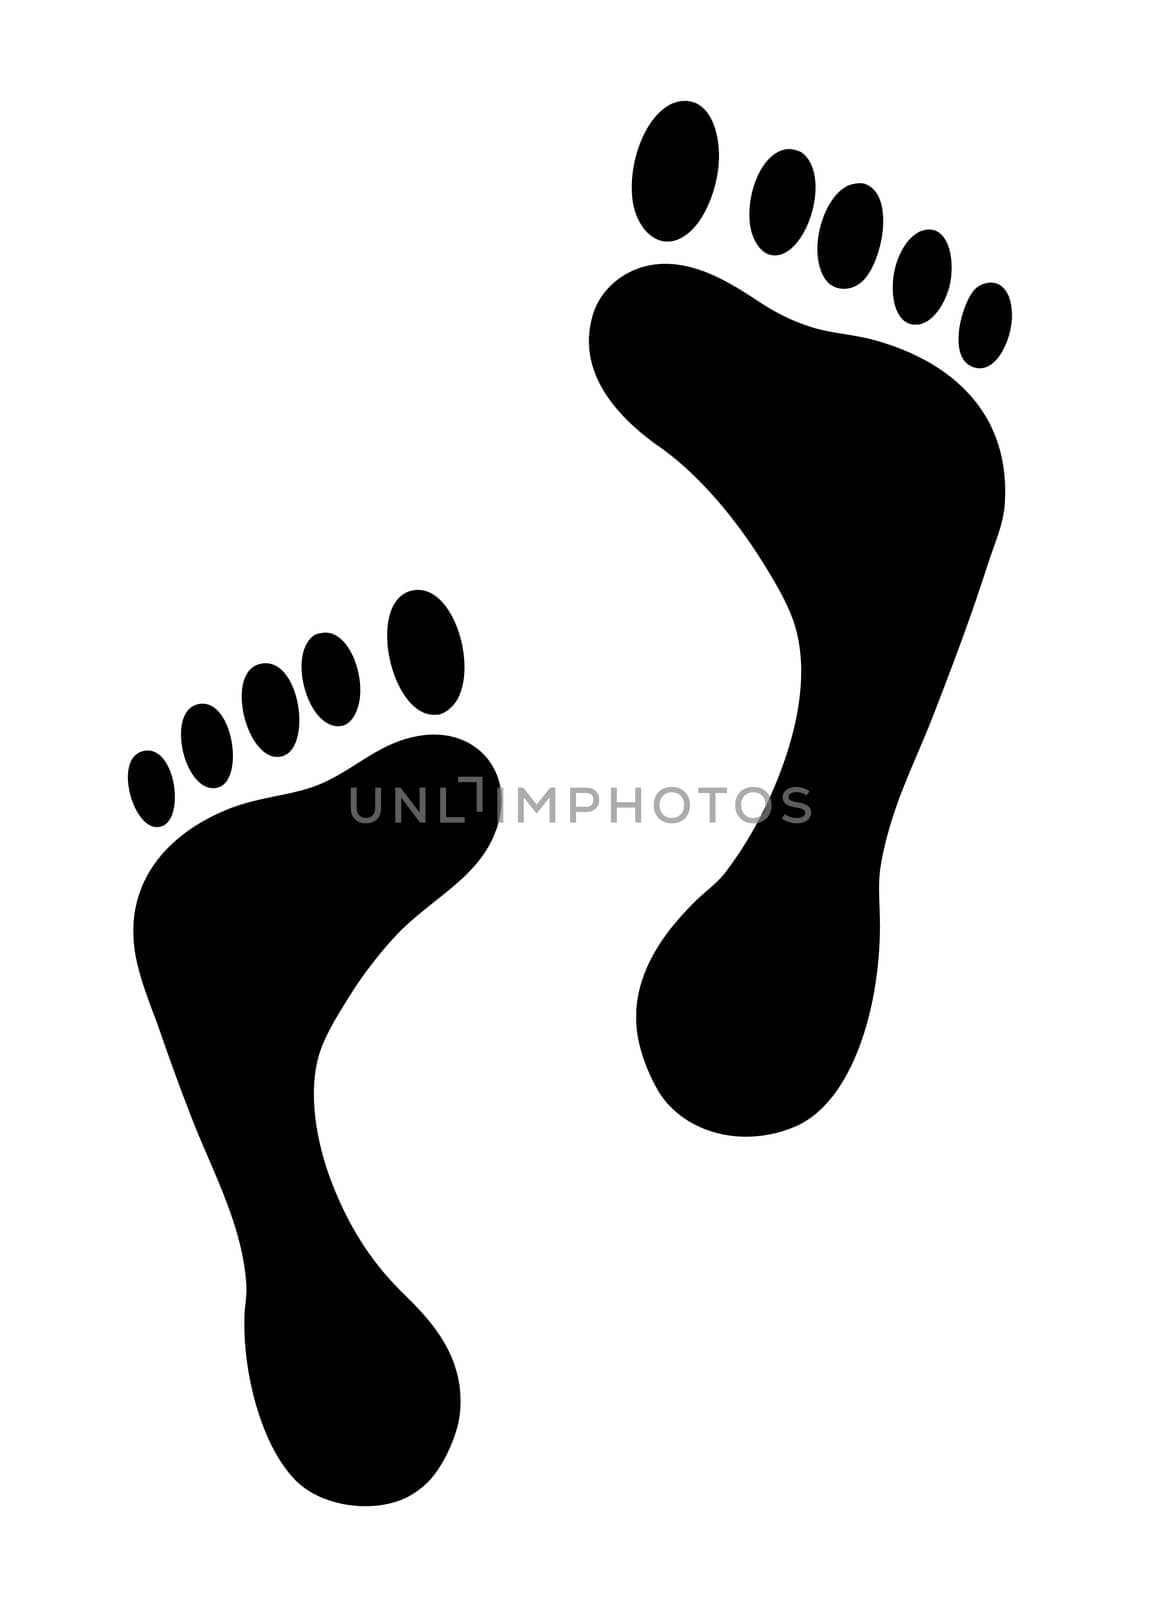 Footprints by peromarketing